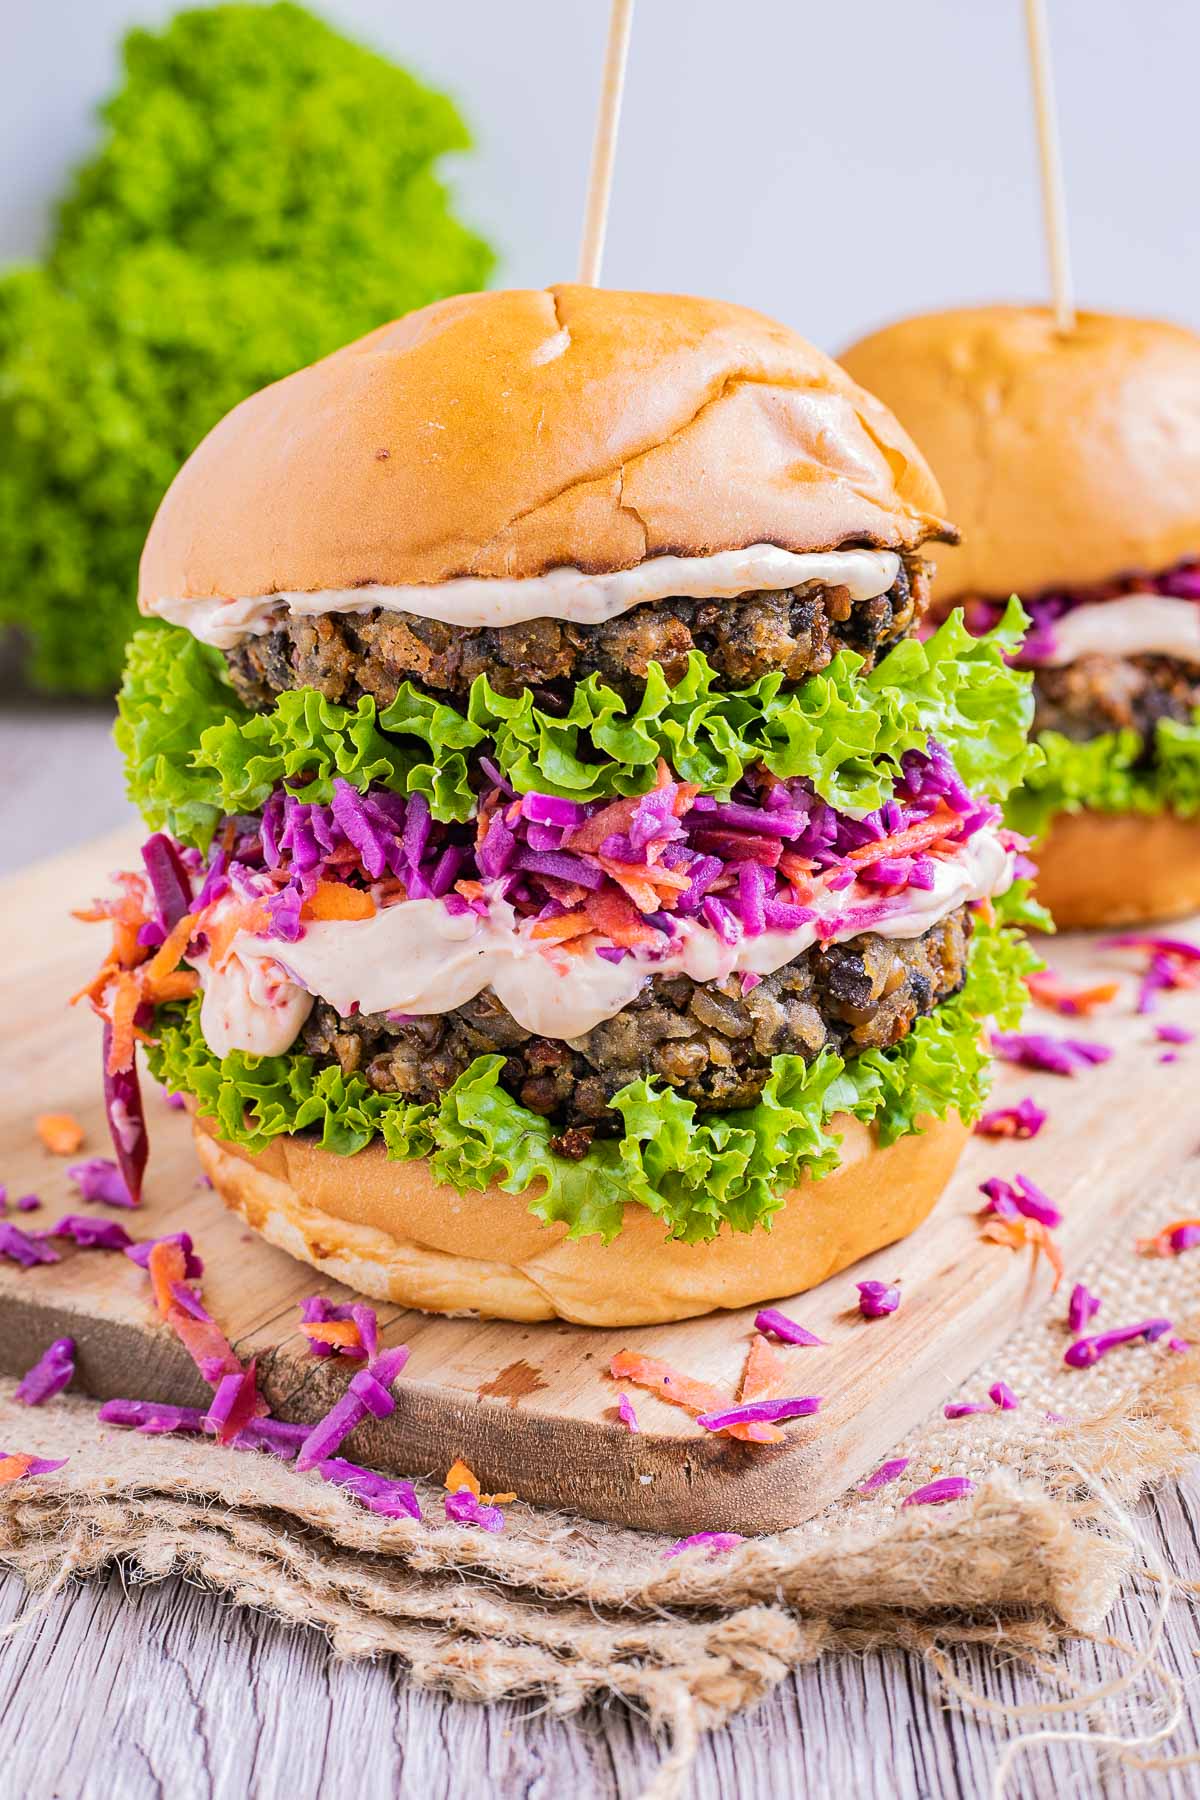 A burger bun with raffled green lettuce two lentil patties, purple coleslaw and light orange sauce.